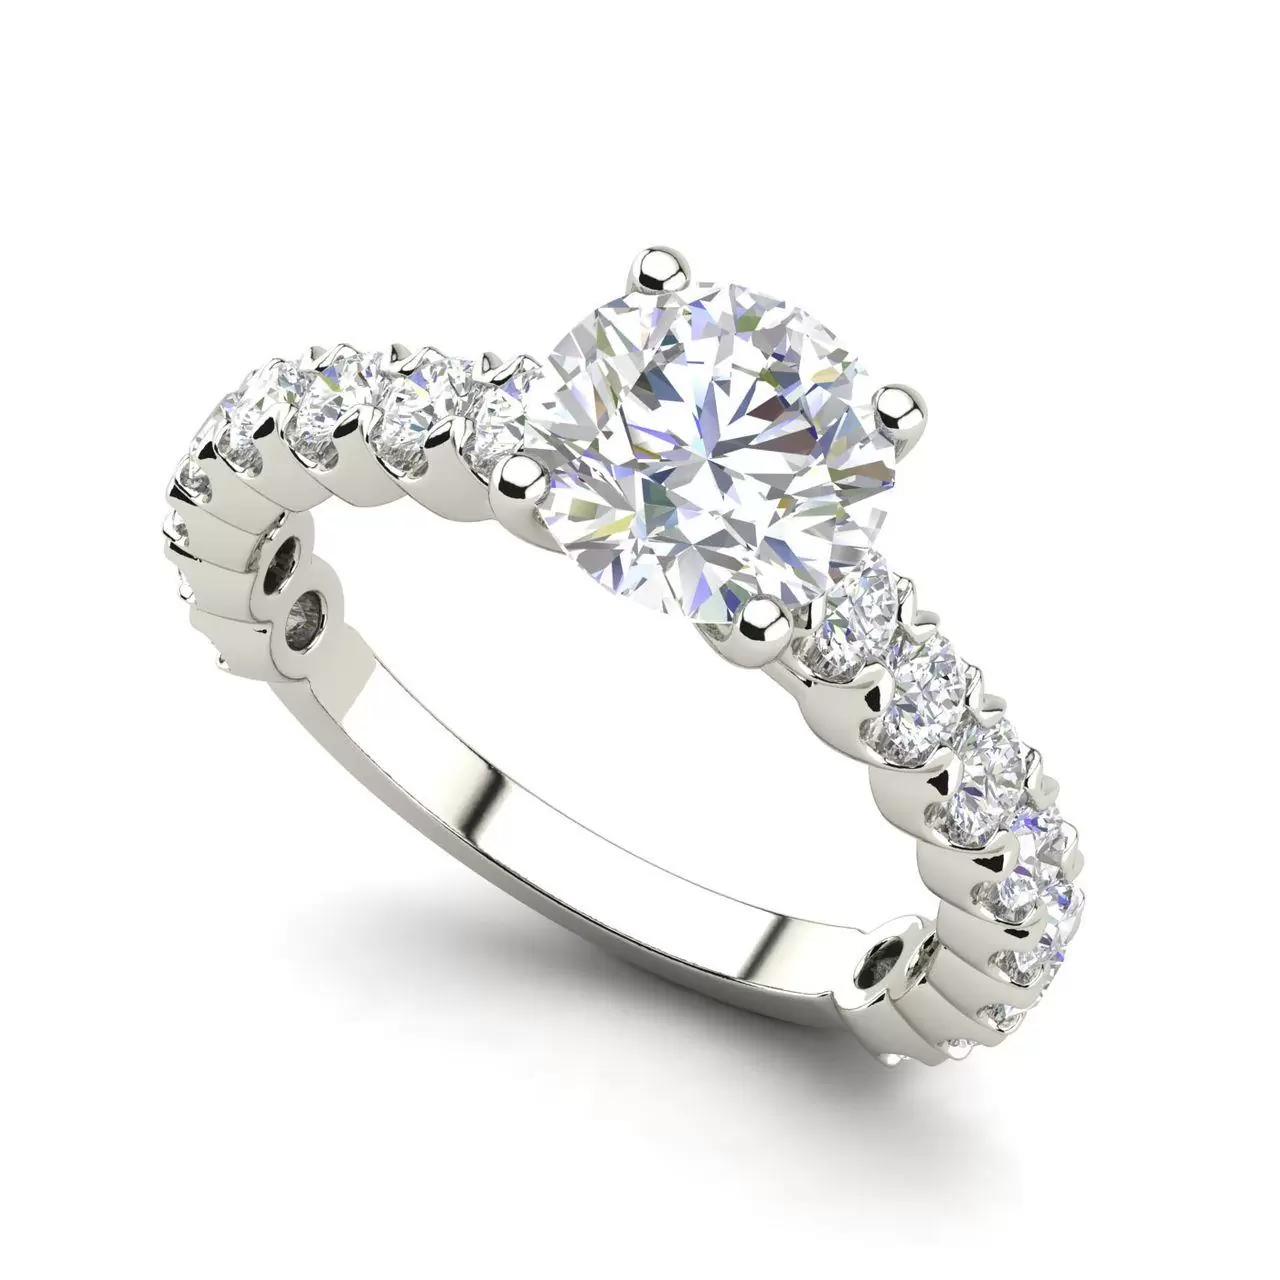 Solitaire 1.2 Carat Round Cut Diamond Engagement Ring